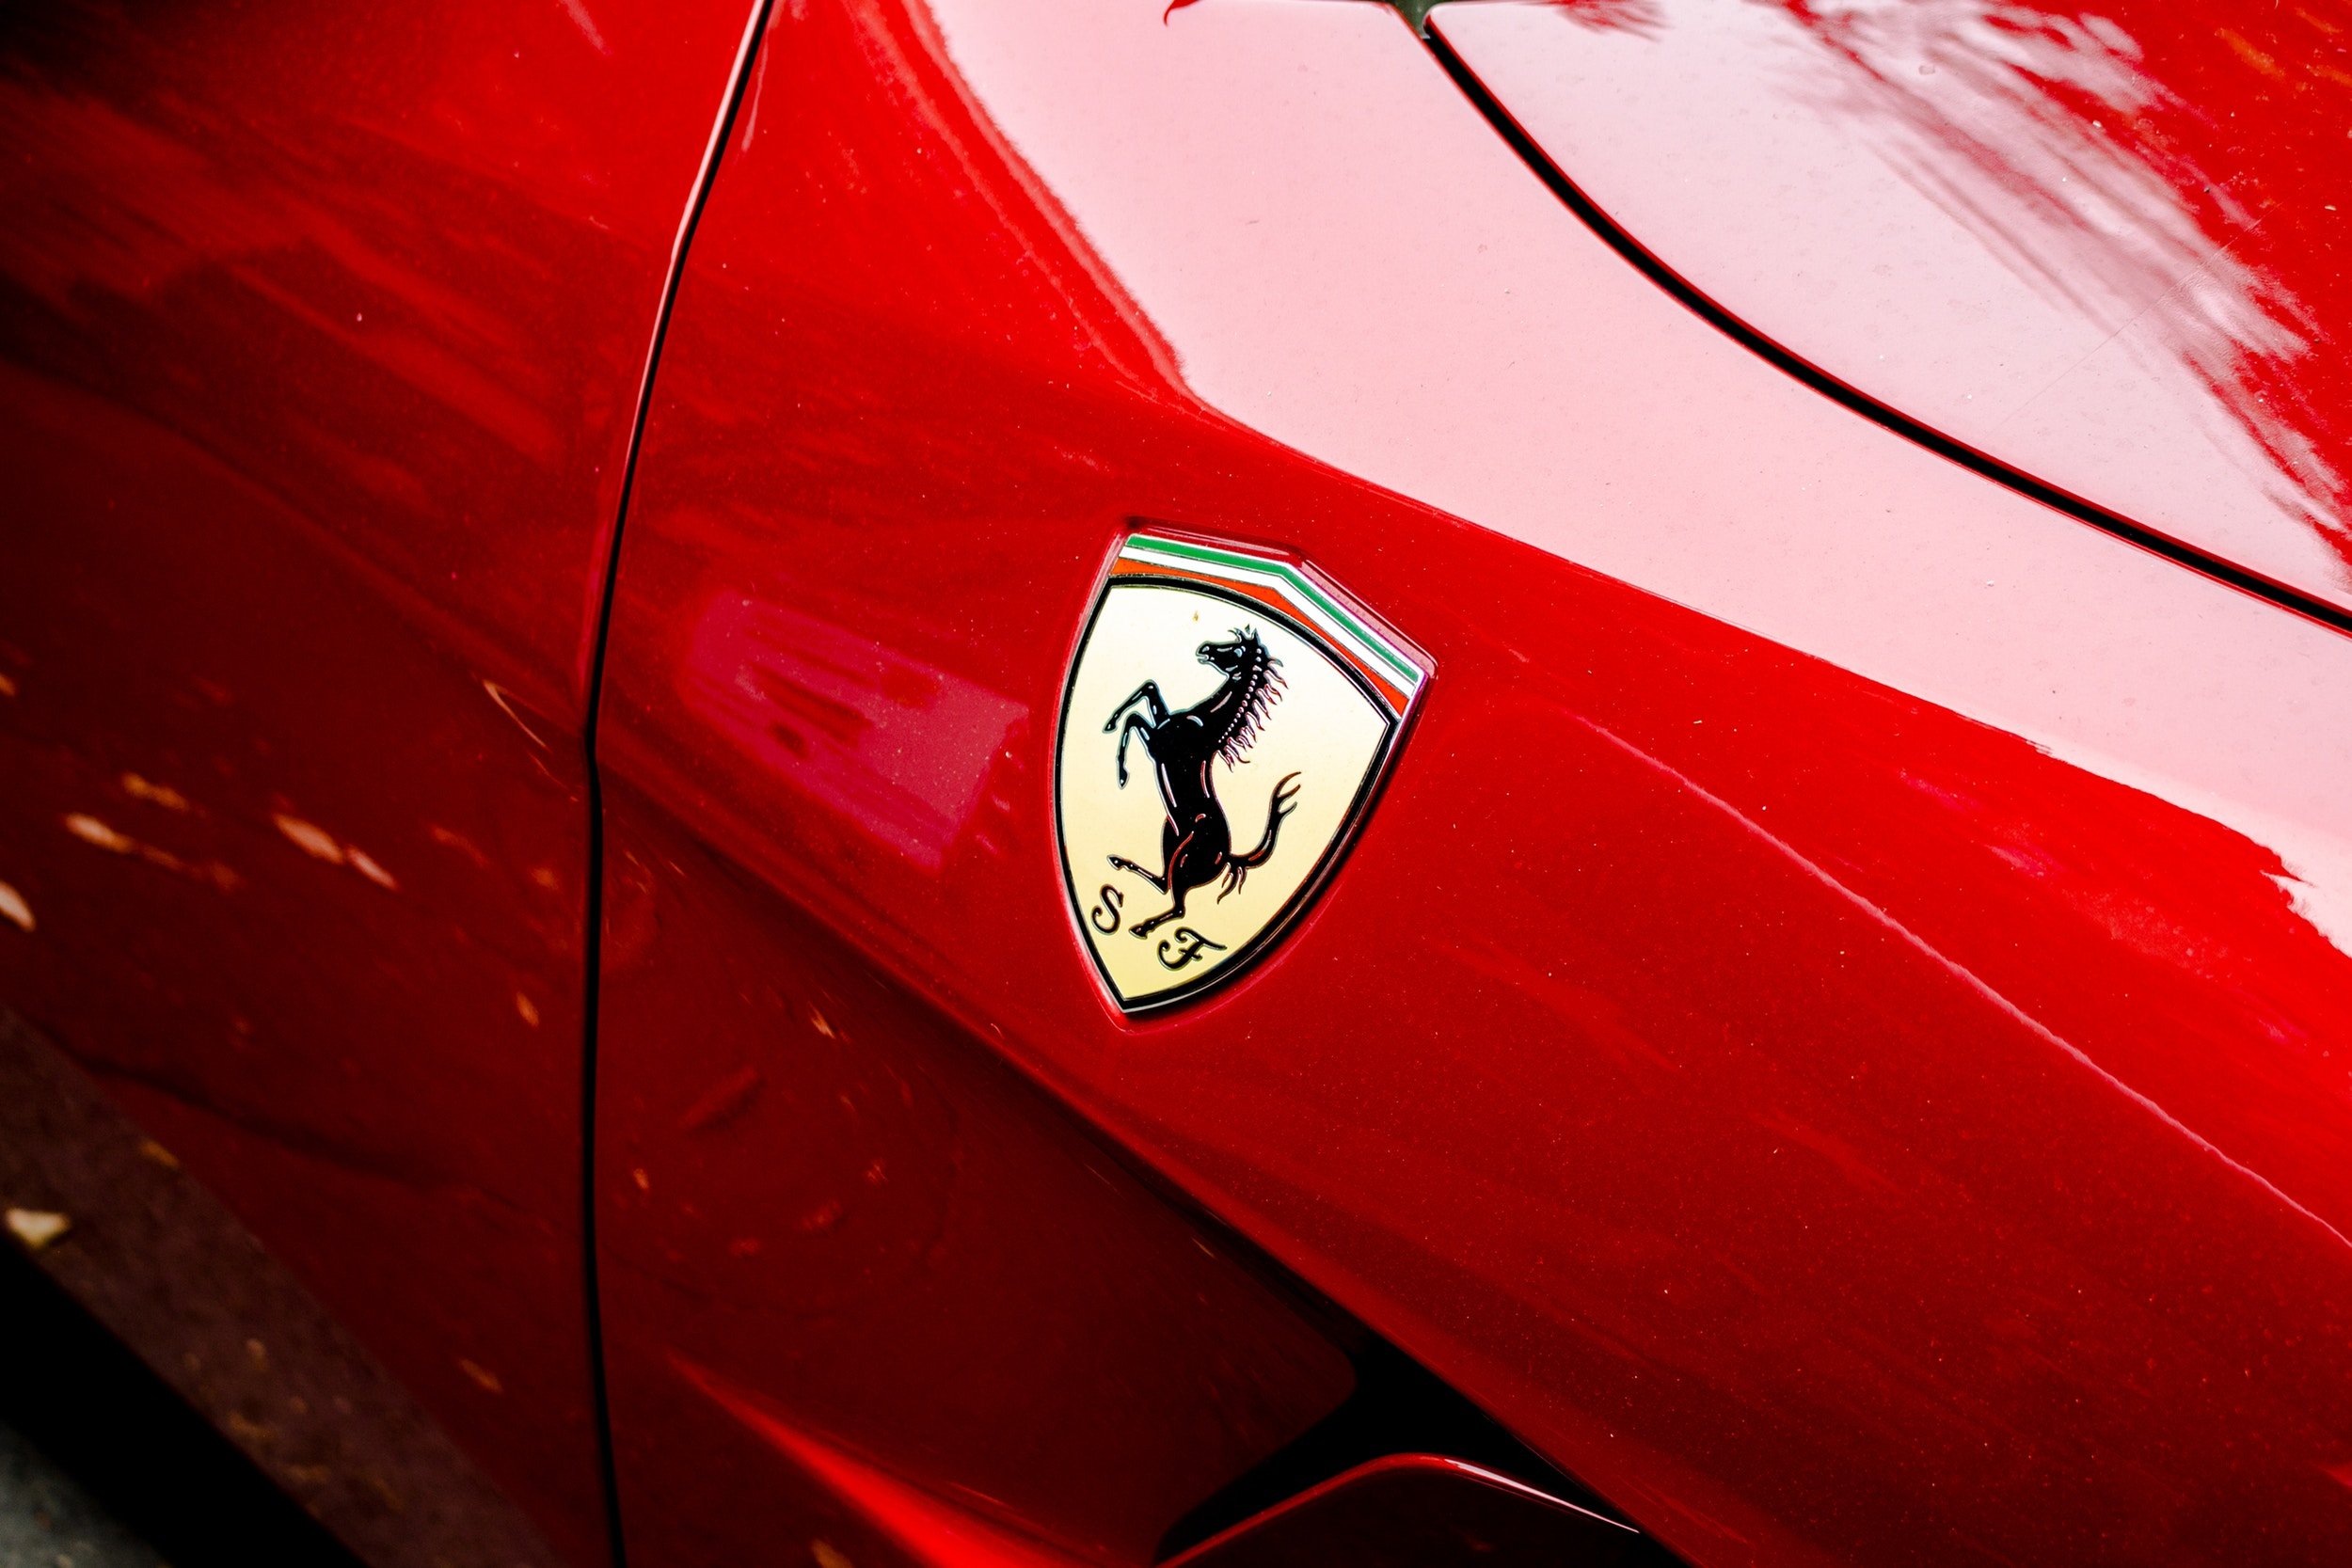 Ferrari Prancing Horse logo.